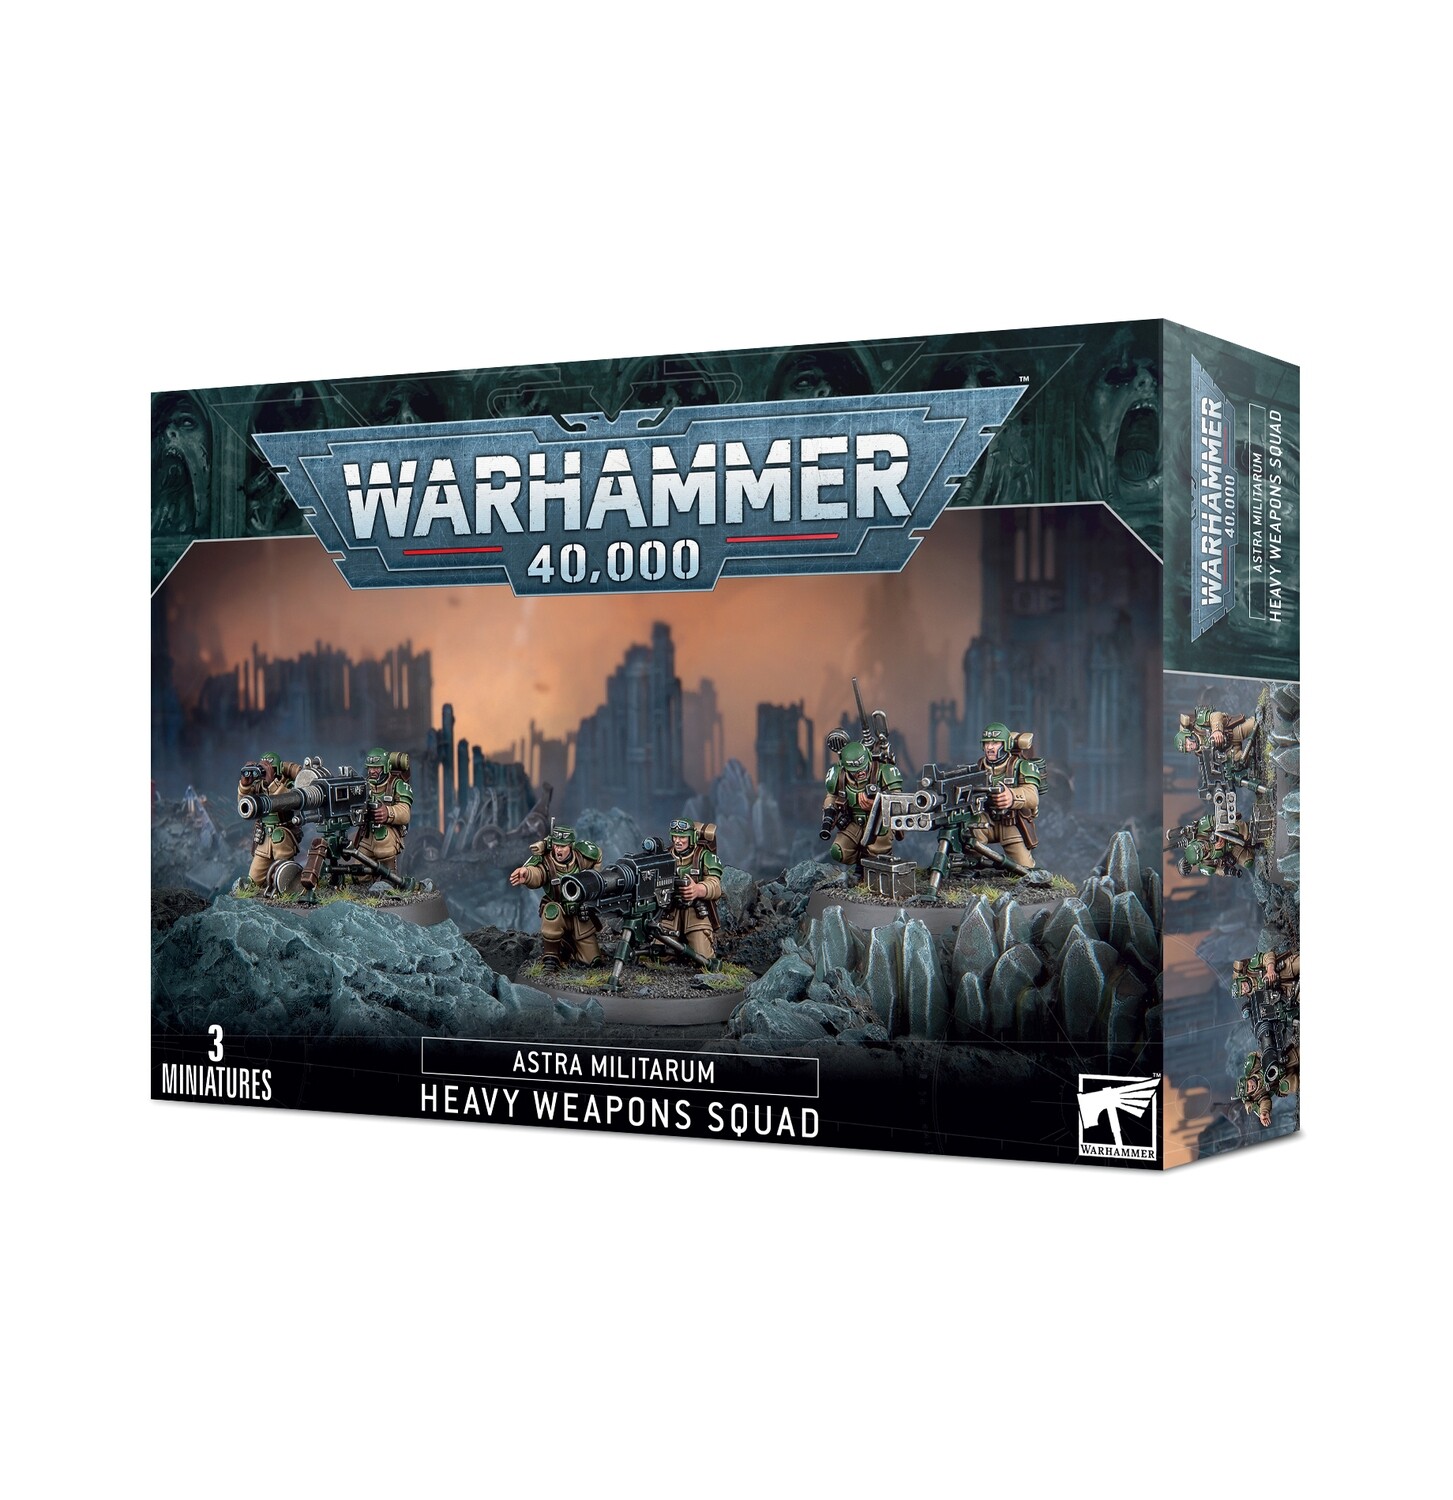 Warhammer 40,000 Astra Militarum Heavy Weapons Squad